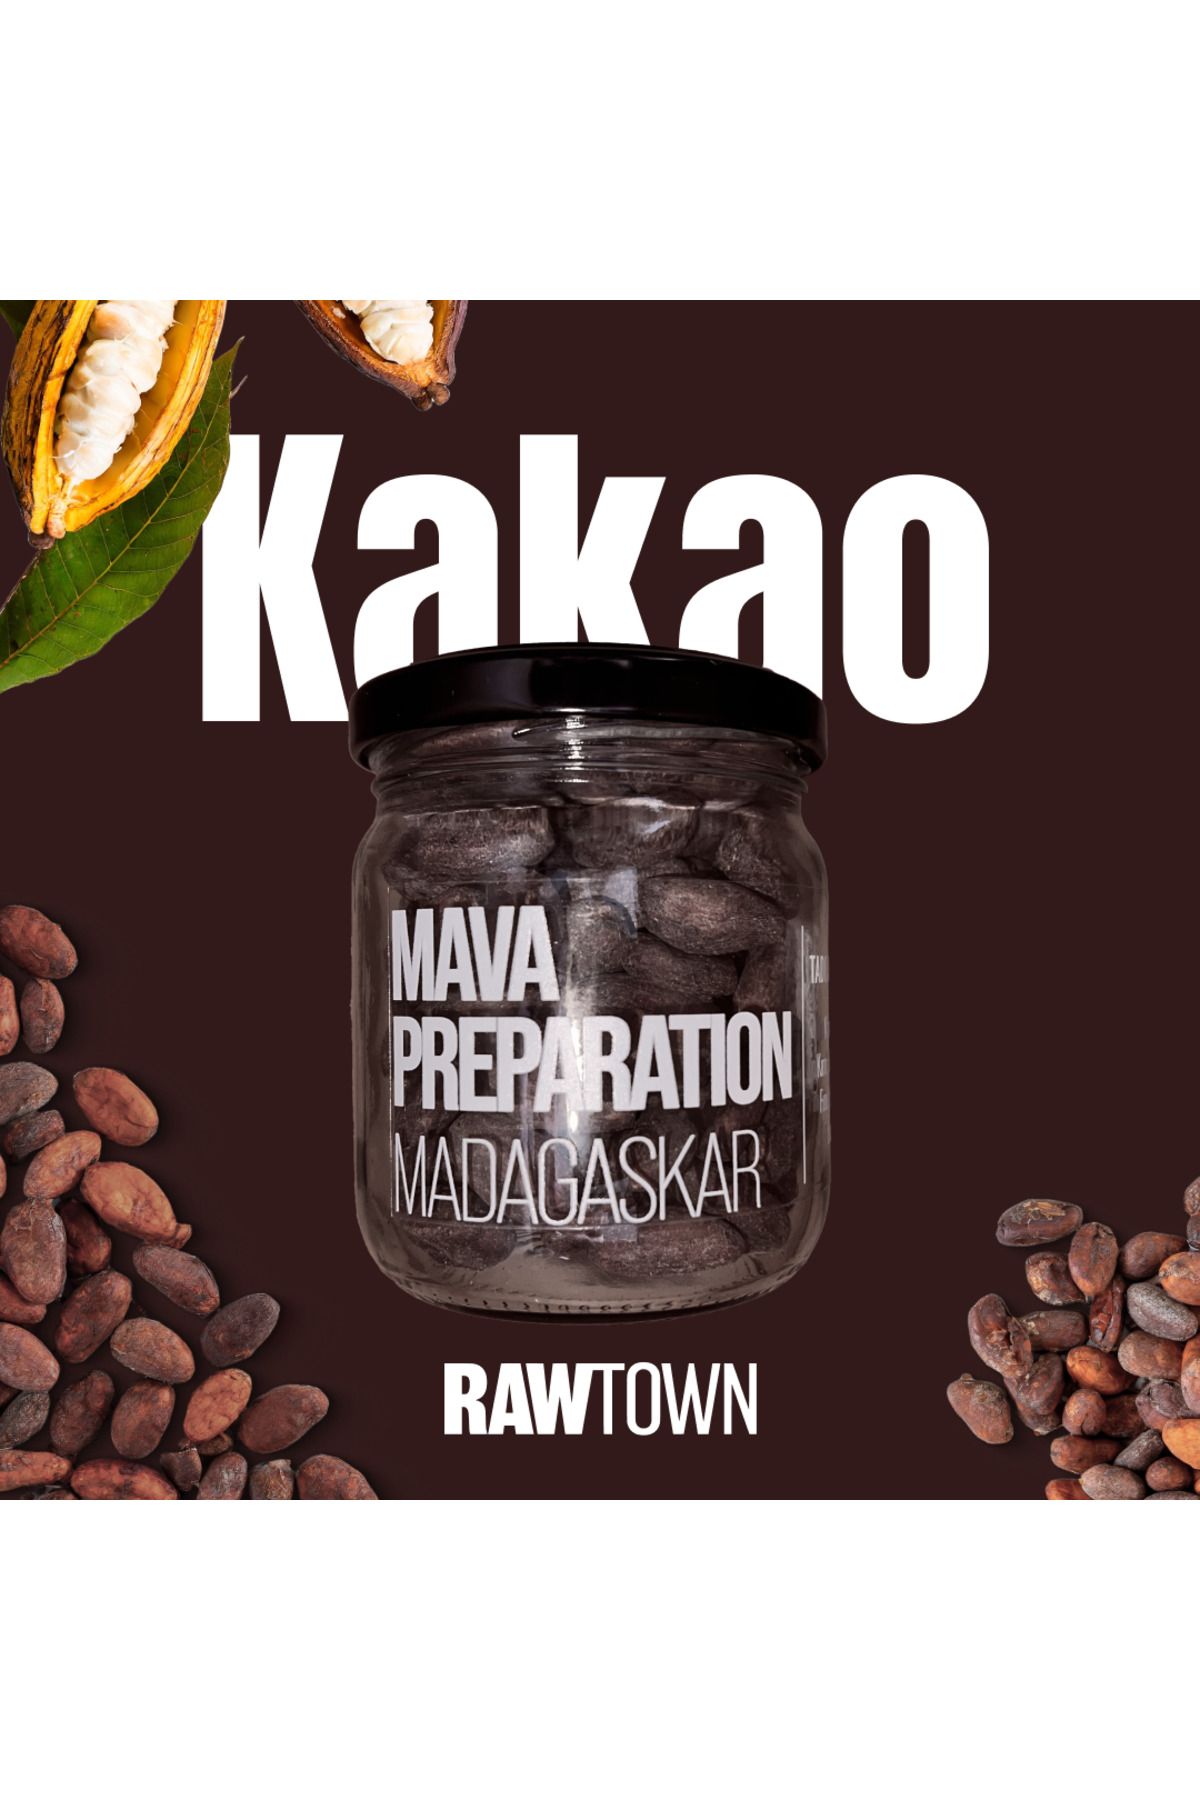 RAWTOWN Madagaskar Mava Preparation Kakao Çekirdeği 100g